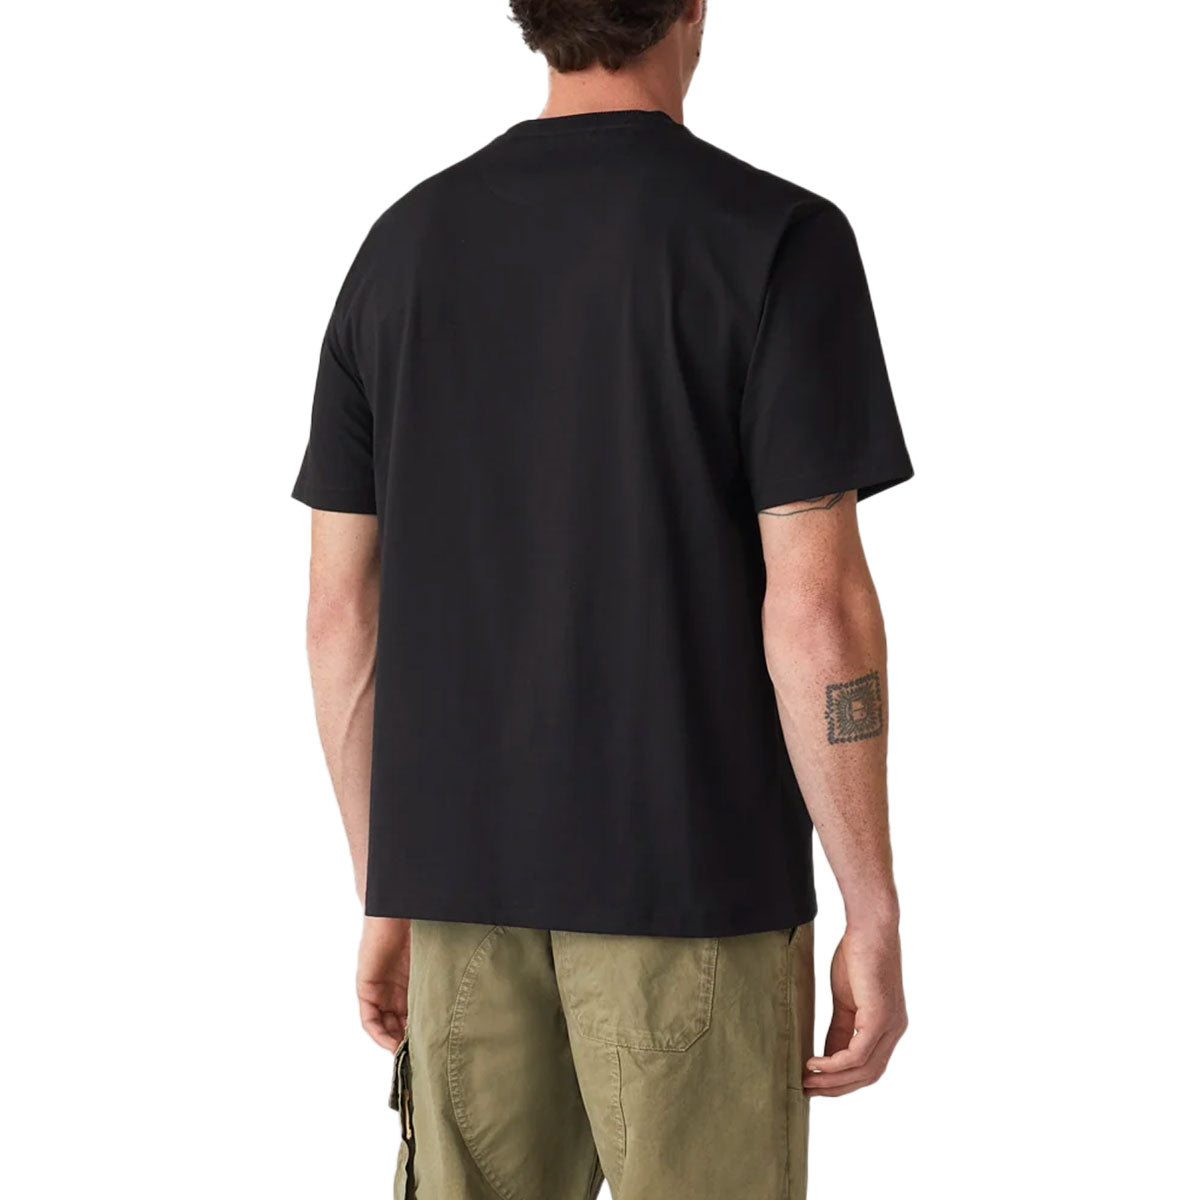 Black Transit Organic Cotton T-shirt Short Sleeve Belstaff   